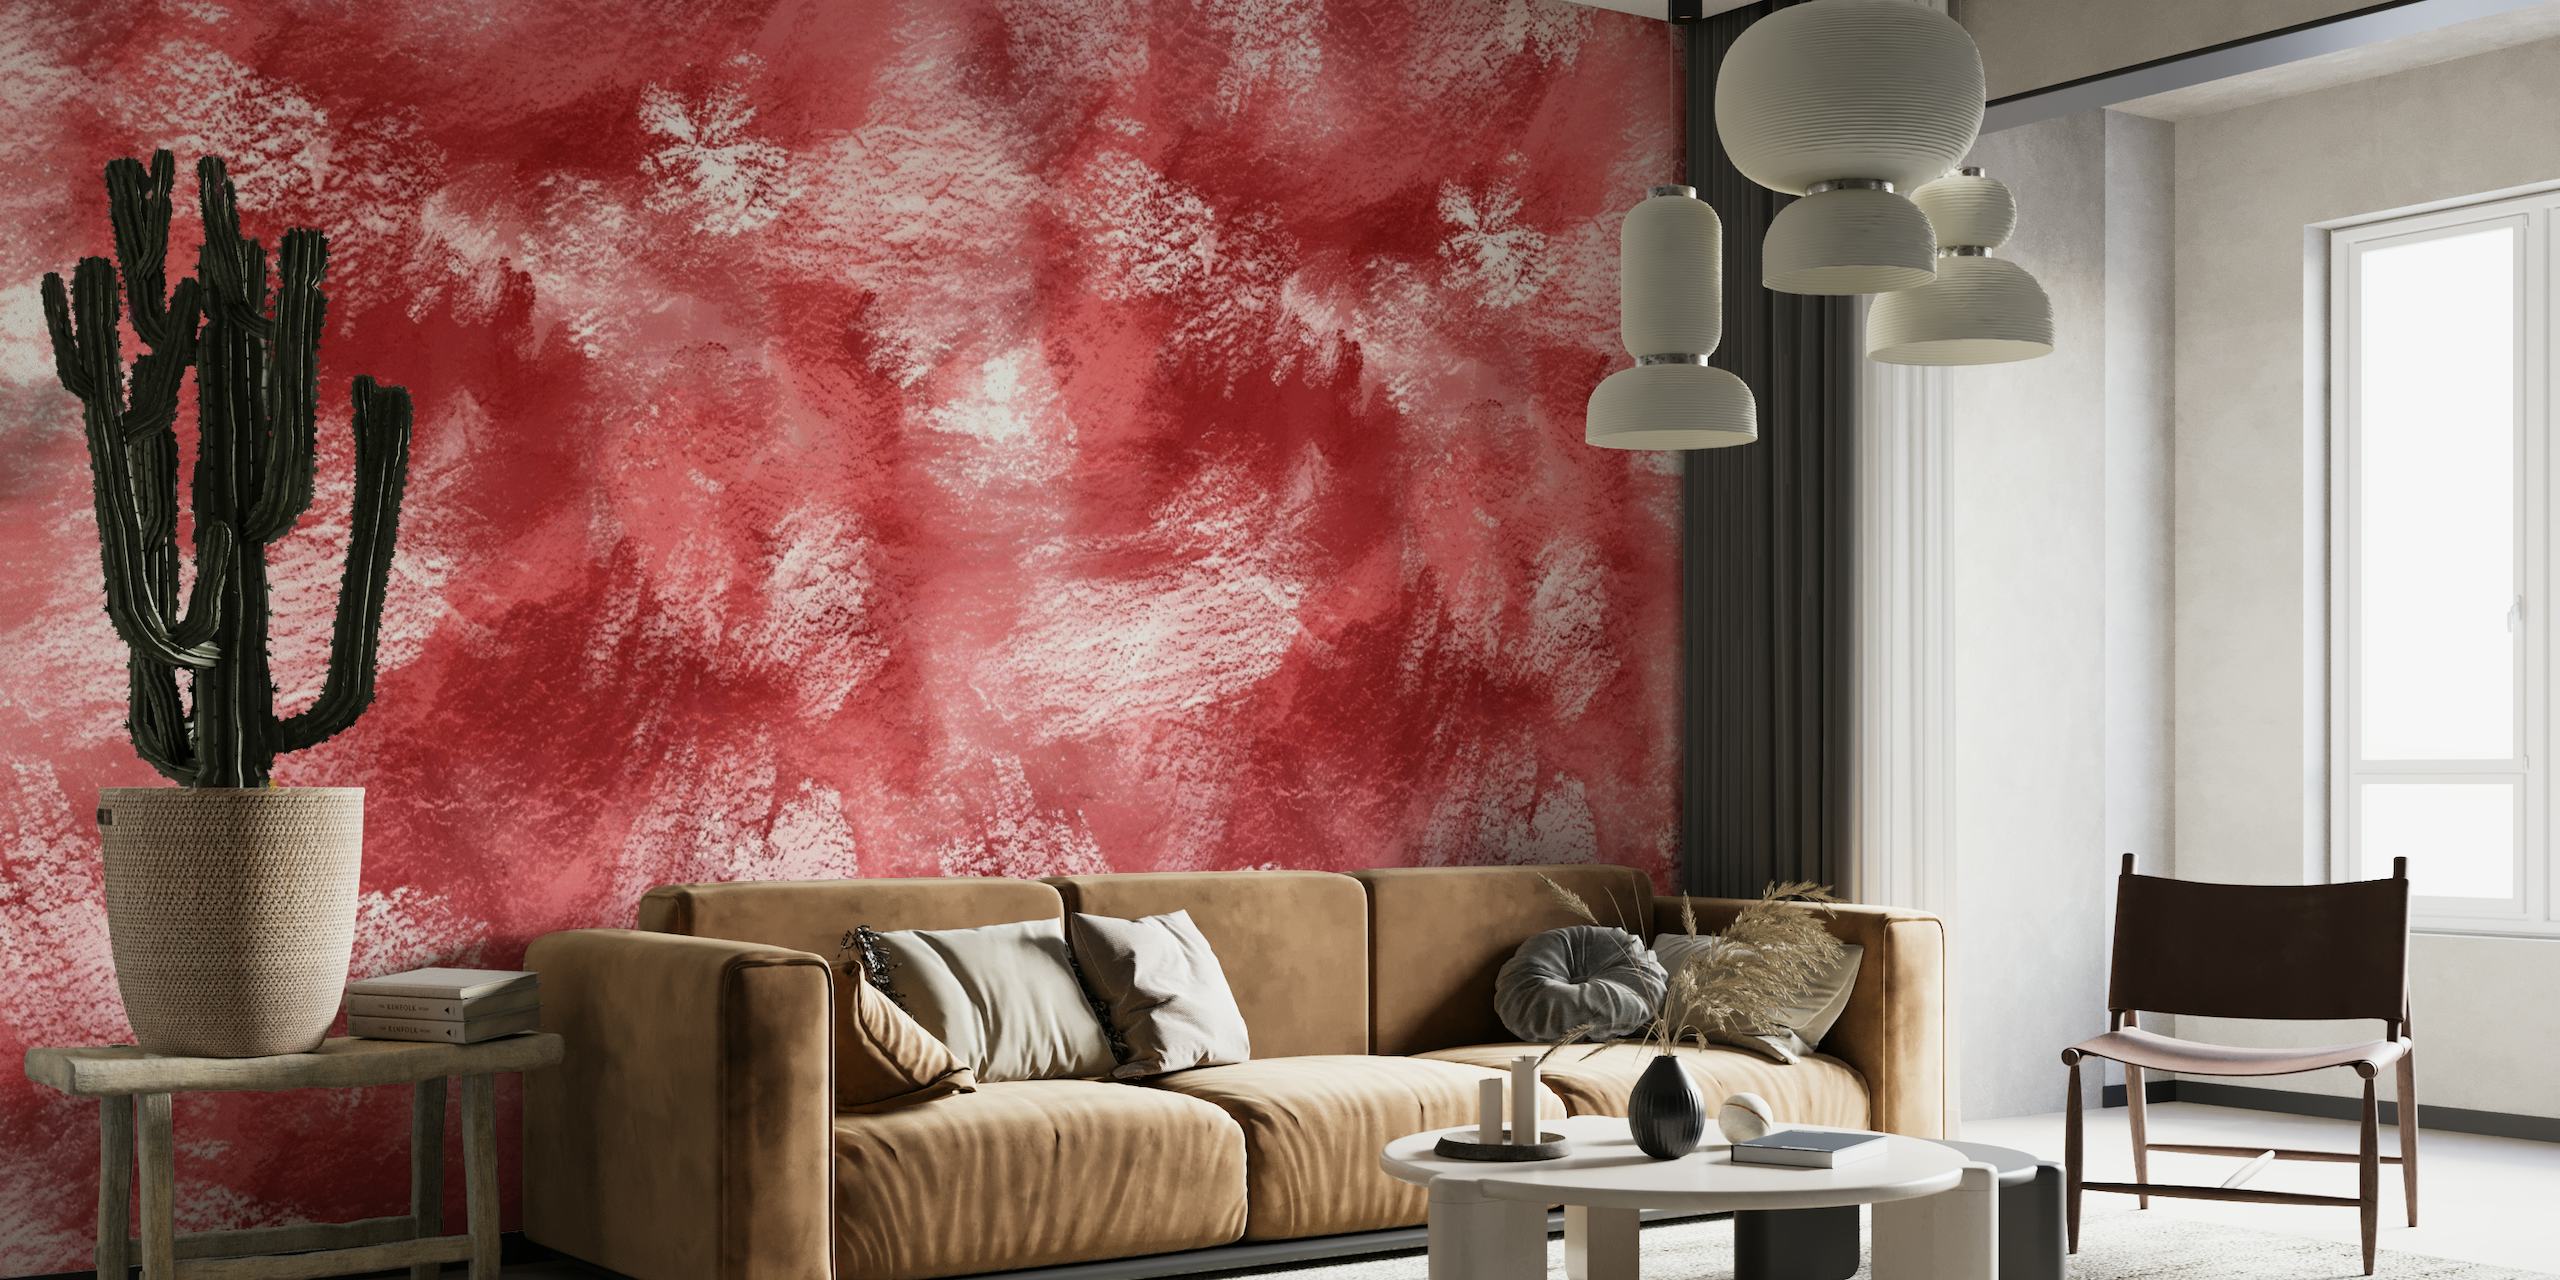 Abstrakt rødt maleri vægmaleri til boligindretning